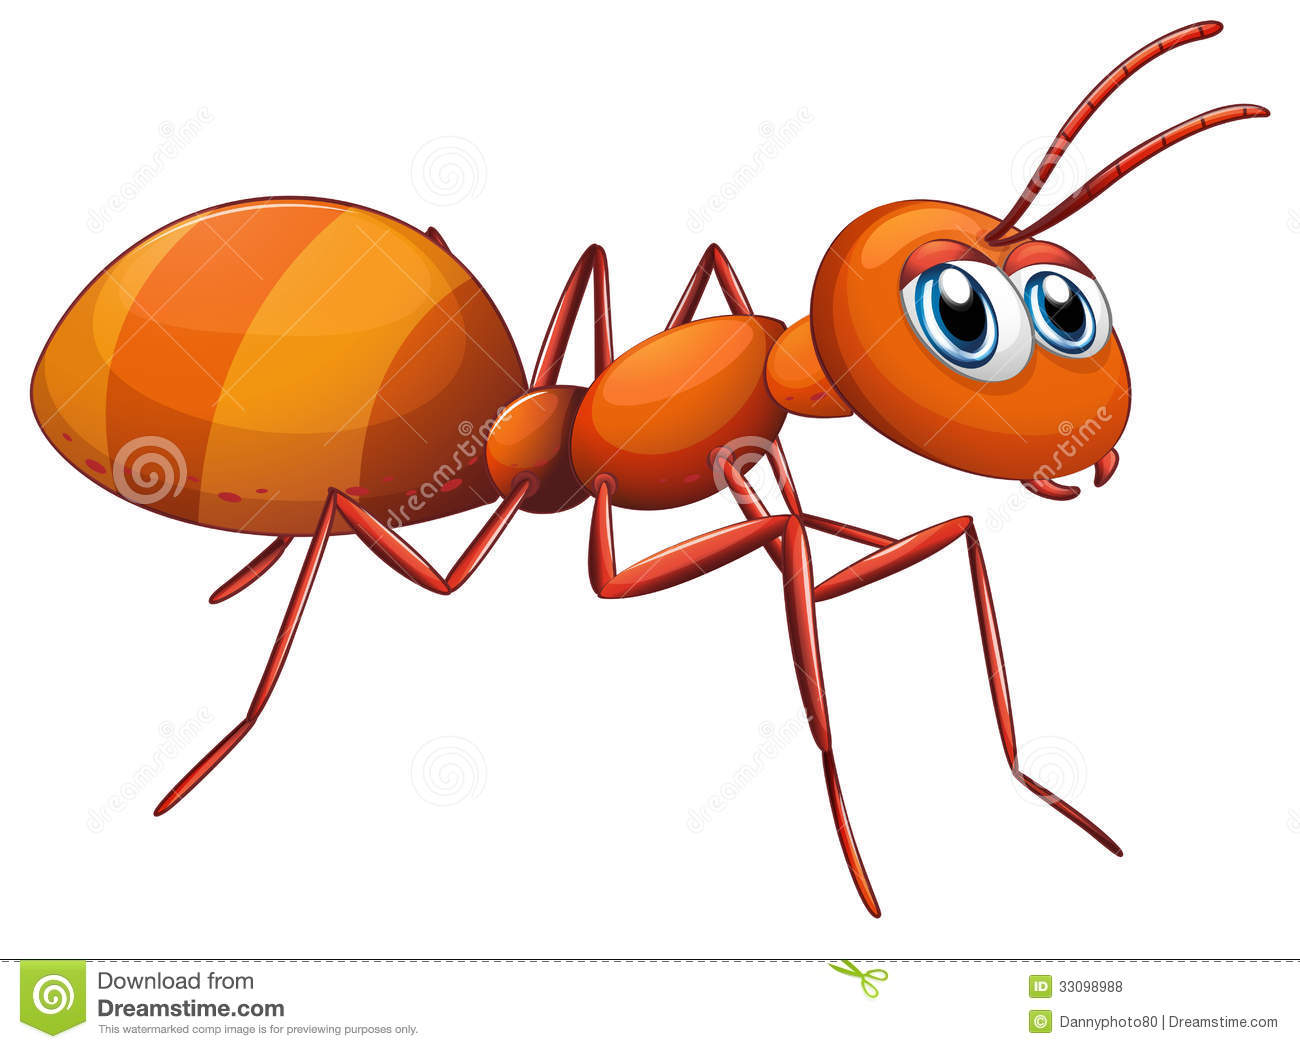 Download ant images littlereasonstosmile. Ants clipart happy